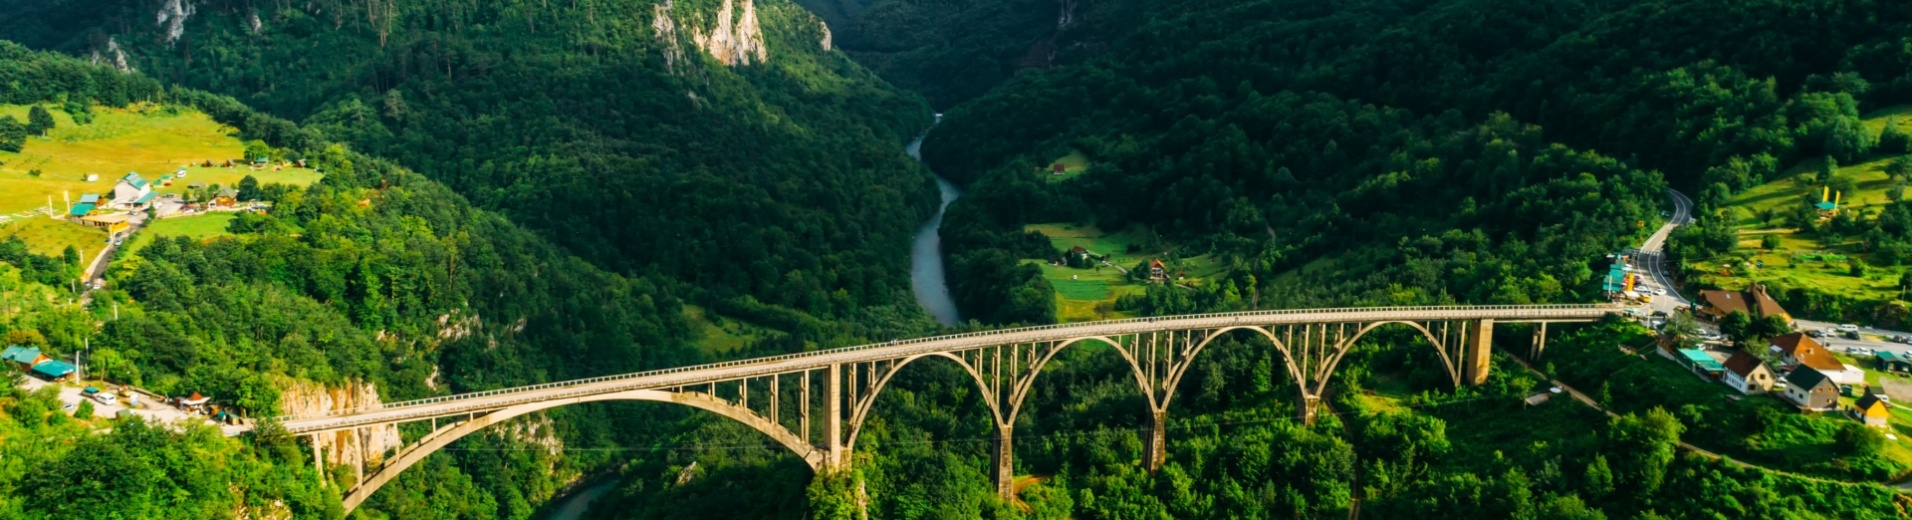 pont rivière tara montenegro